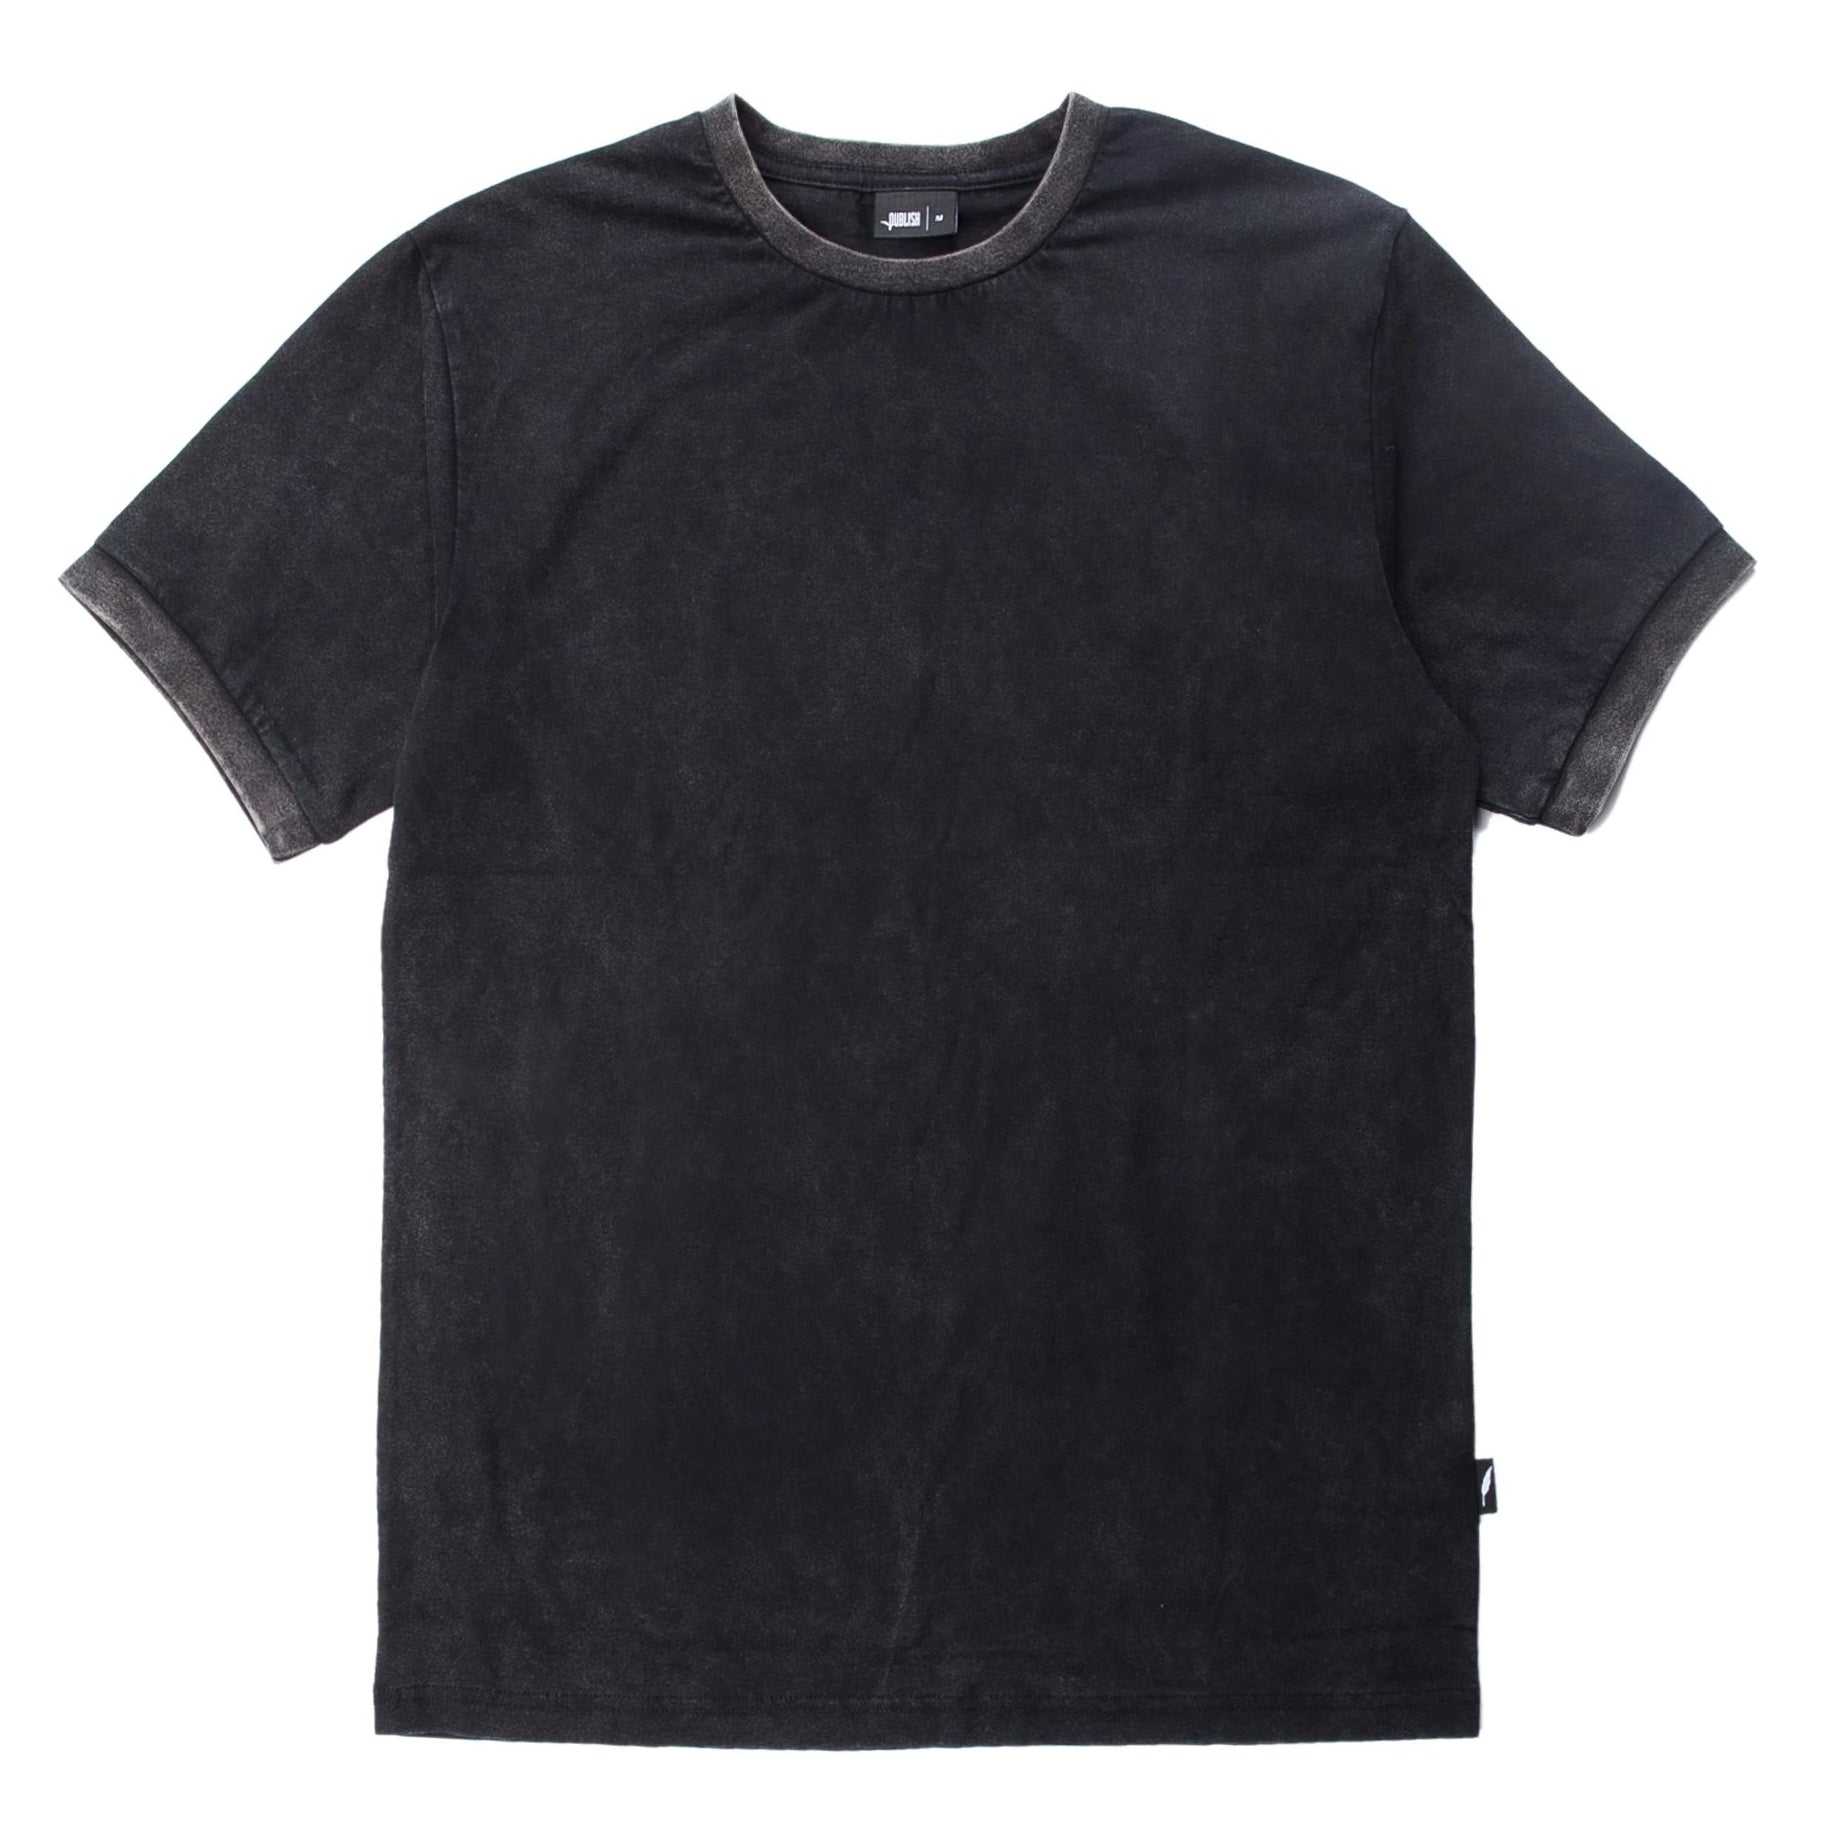 Chas T-Shirt (Black)